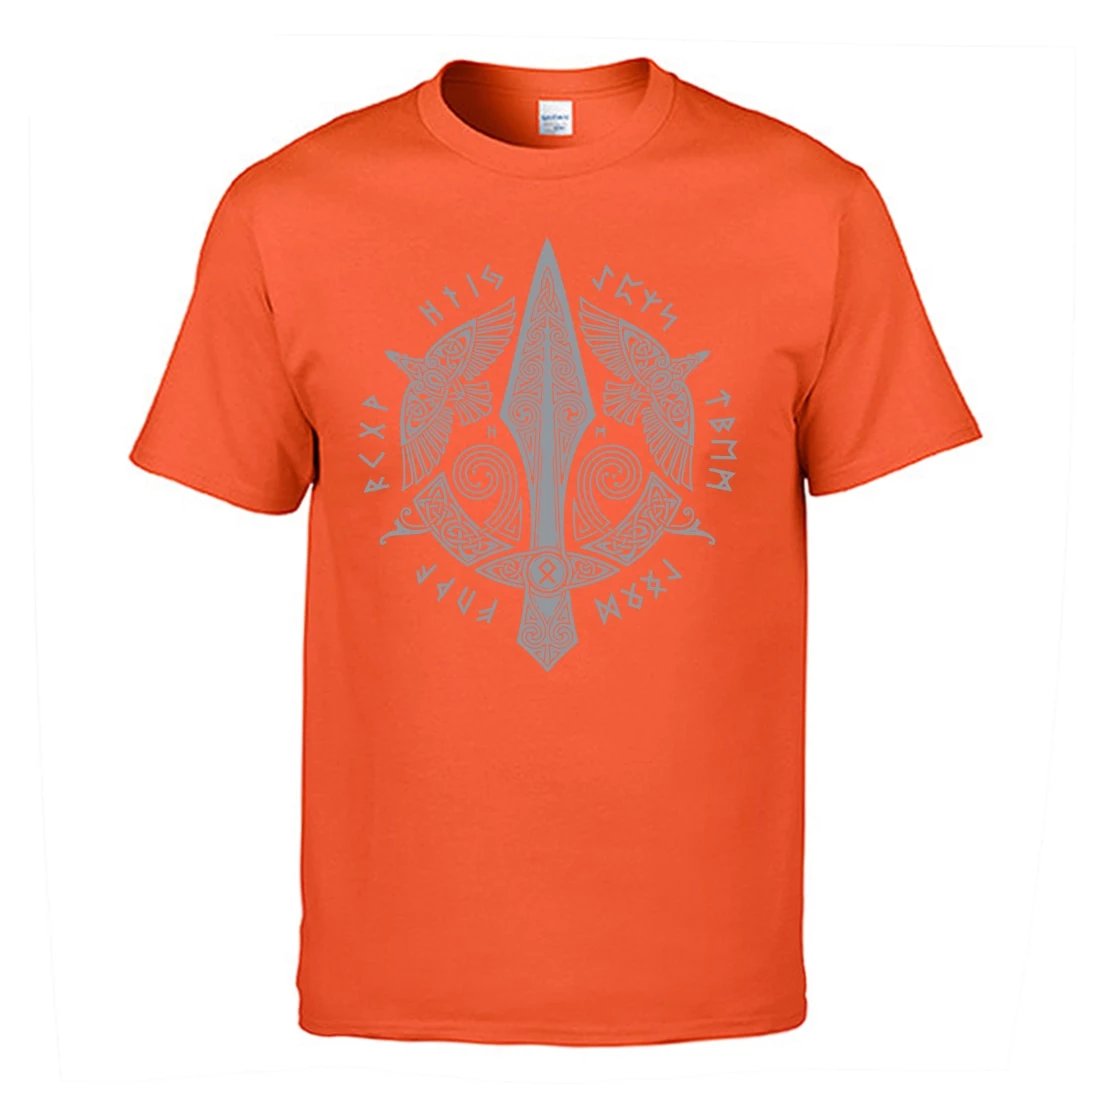 Vikings Odin Spear T-shirts